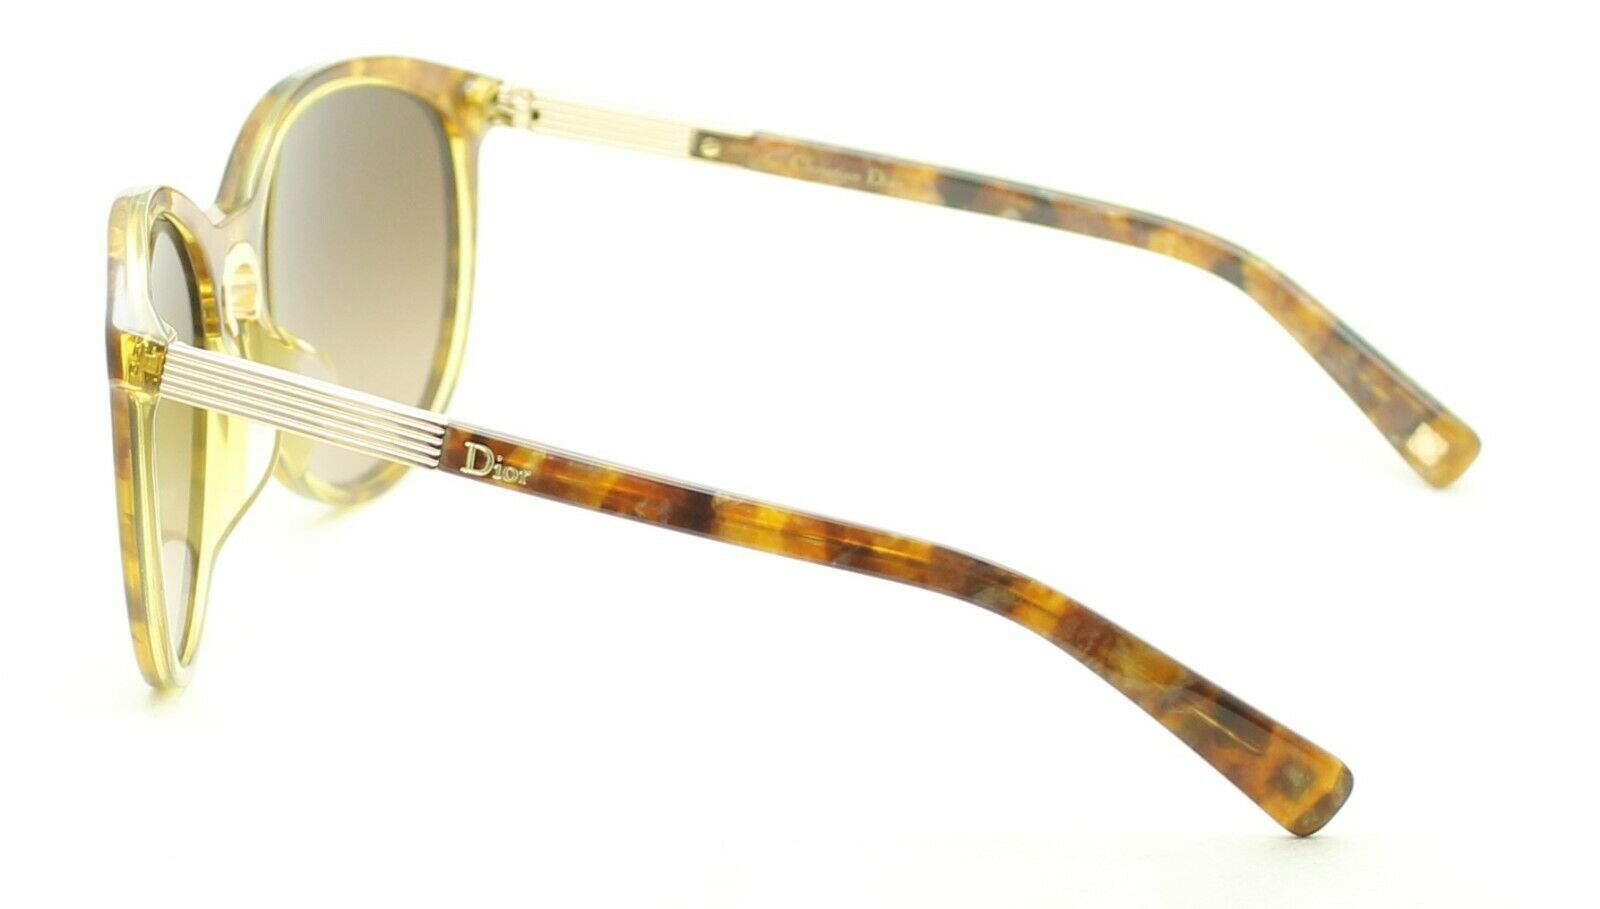 CHRISTIAN DIOR ENTRACTE 1 FS XTCD8 57mm  Sunglasses Shades New BNIB - ITALY